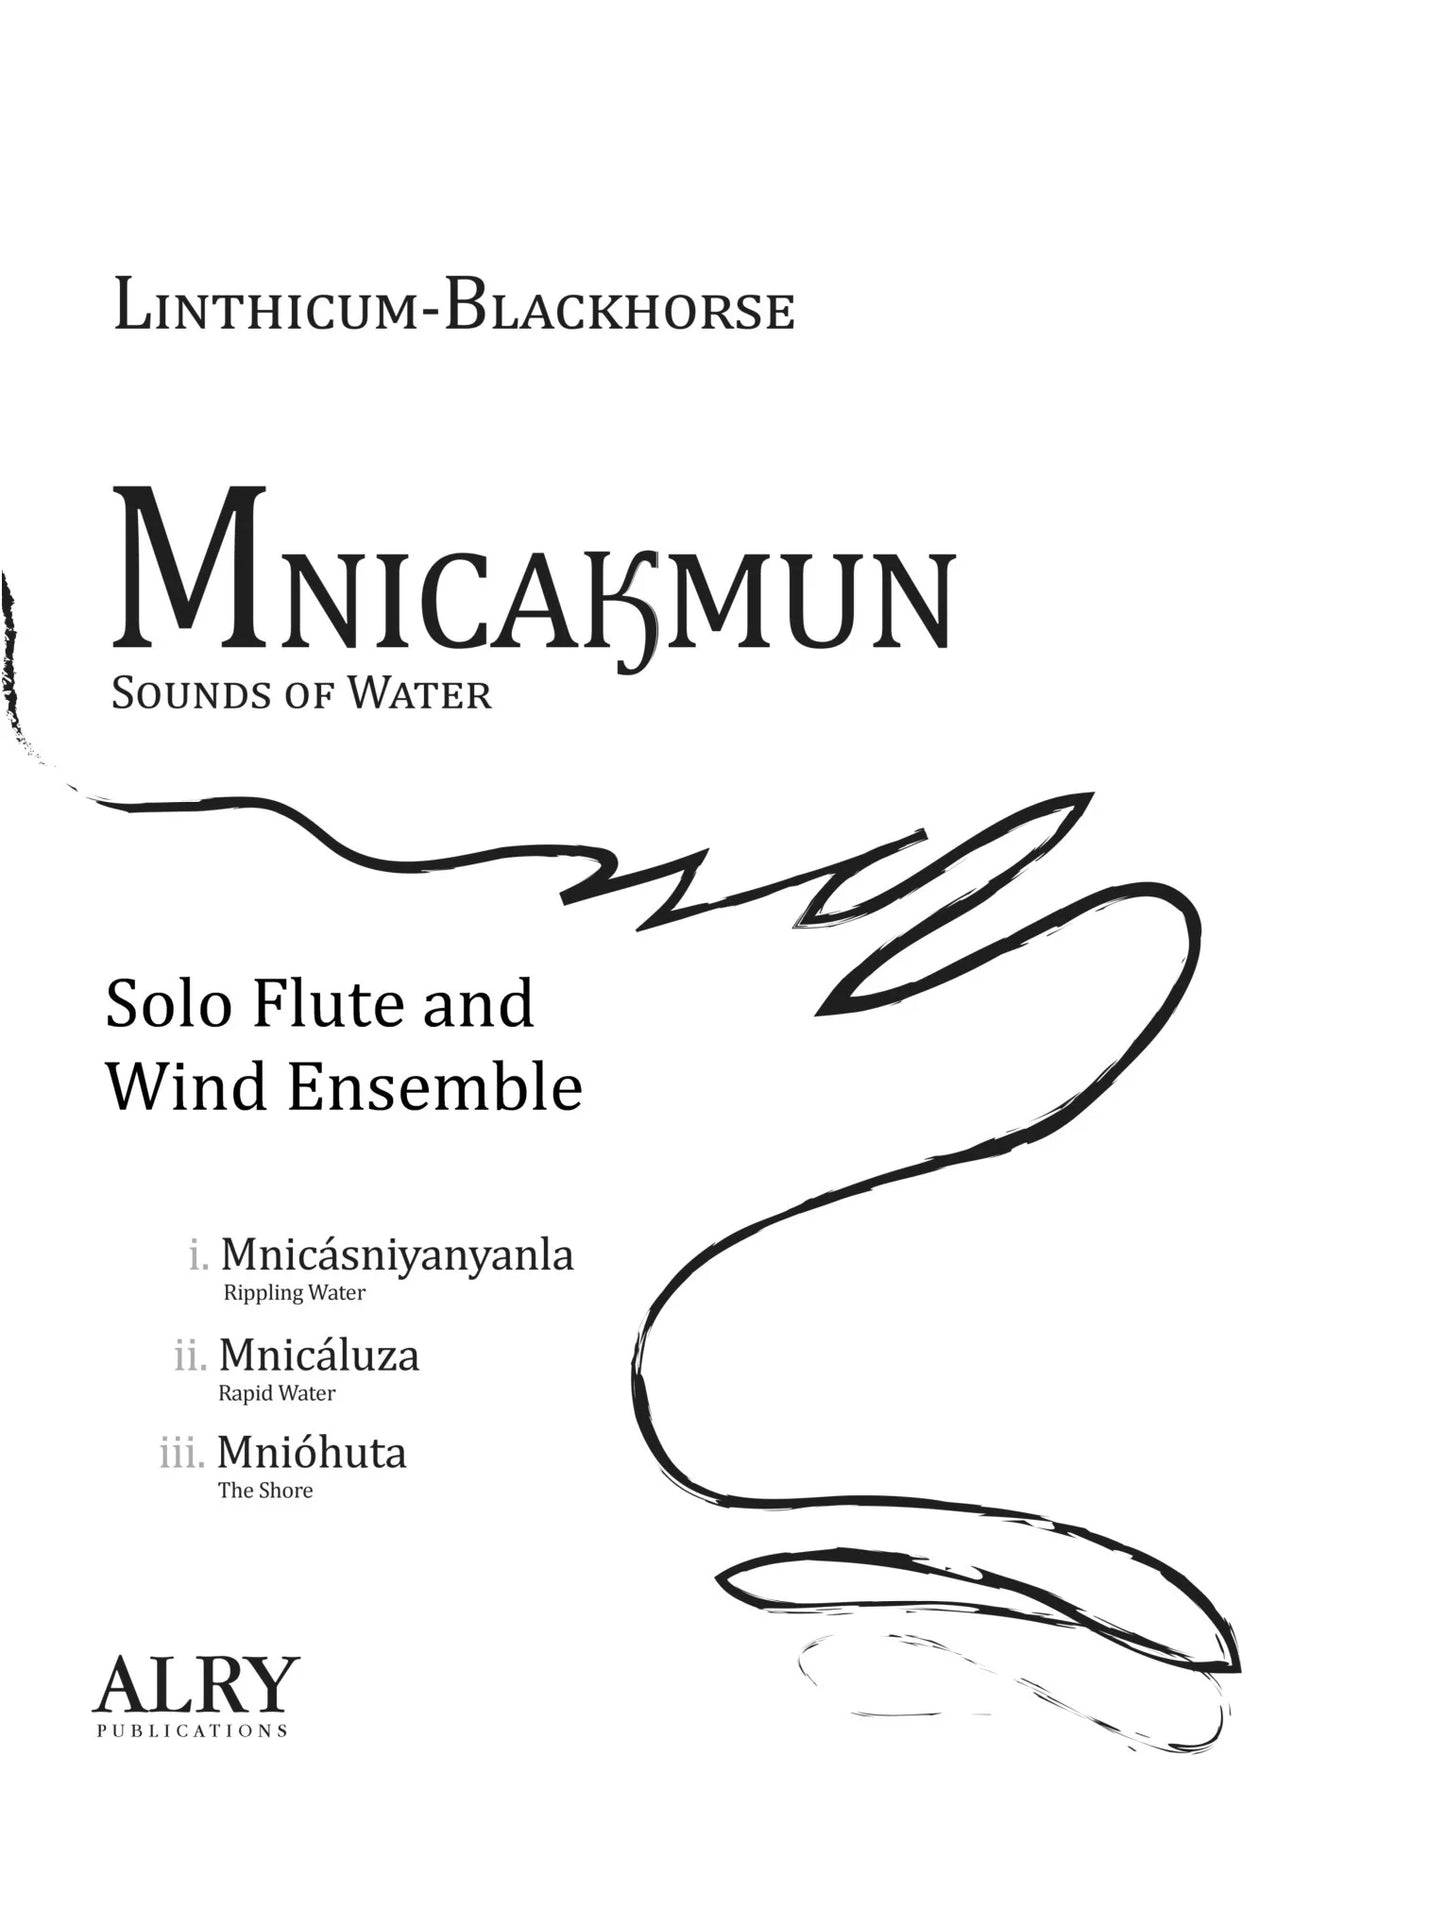 Linthicum-Blackhorse - Mnicakmun for Solo Flute and Wind Ensemble